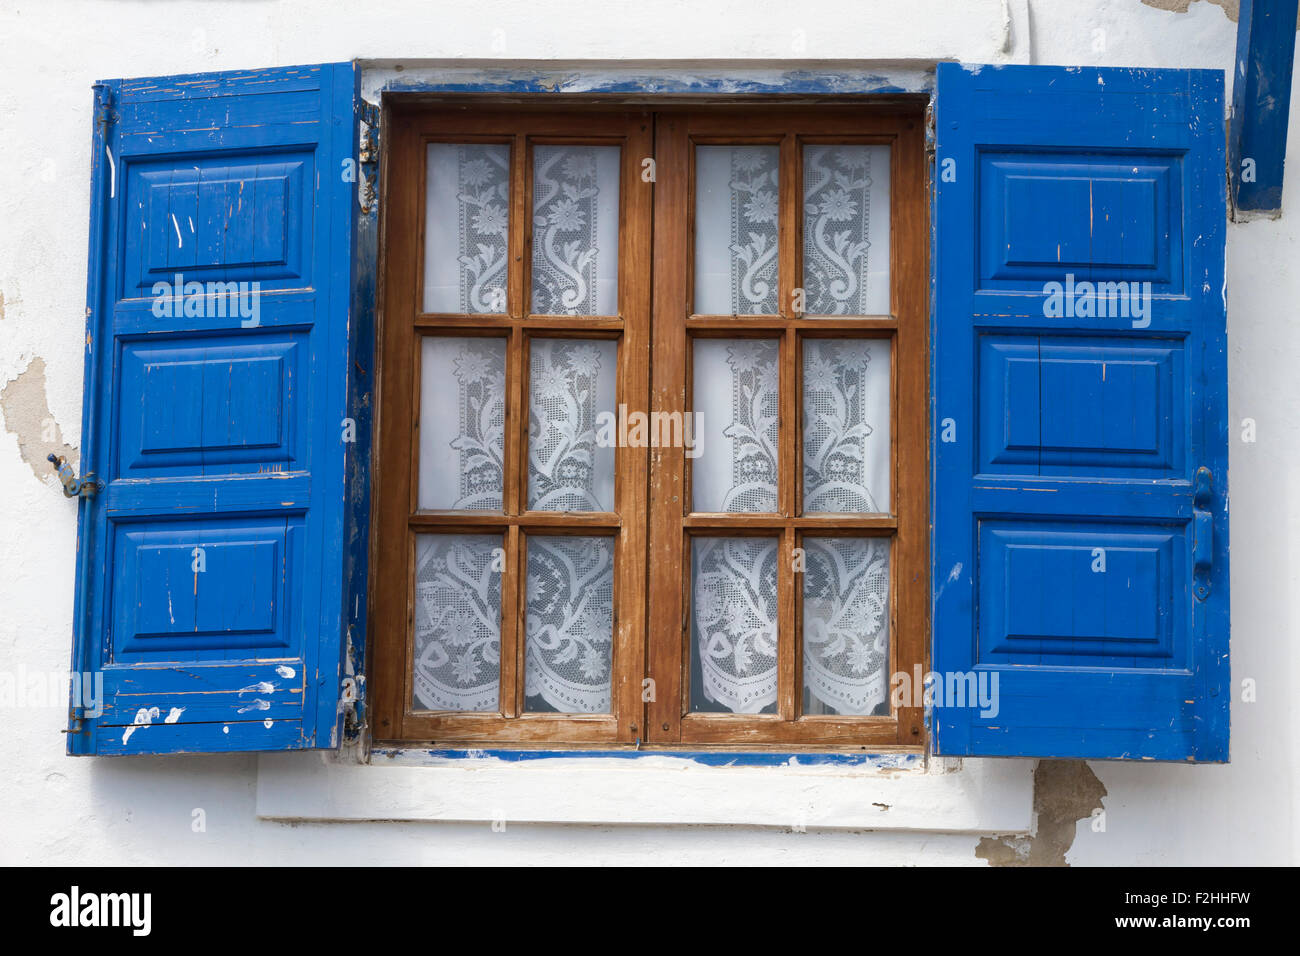 Ventana griega fotografías e imágenes de alta resolución - Alamy